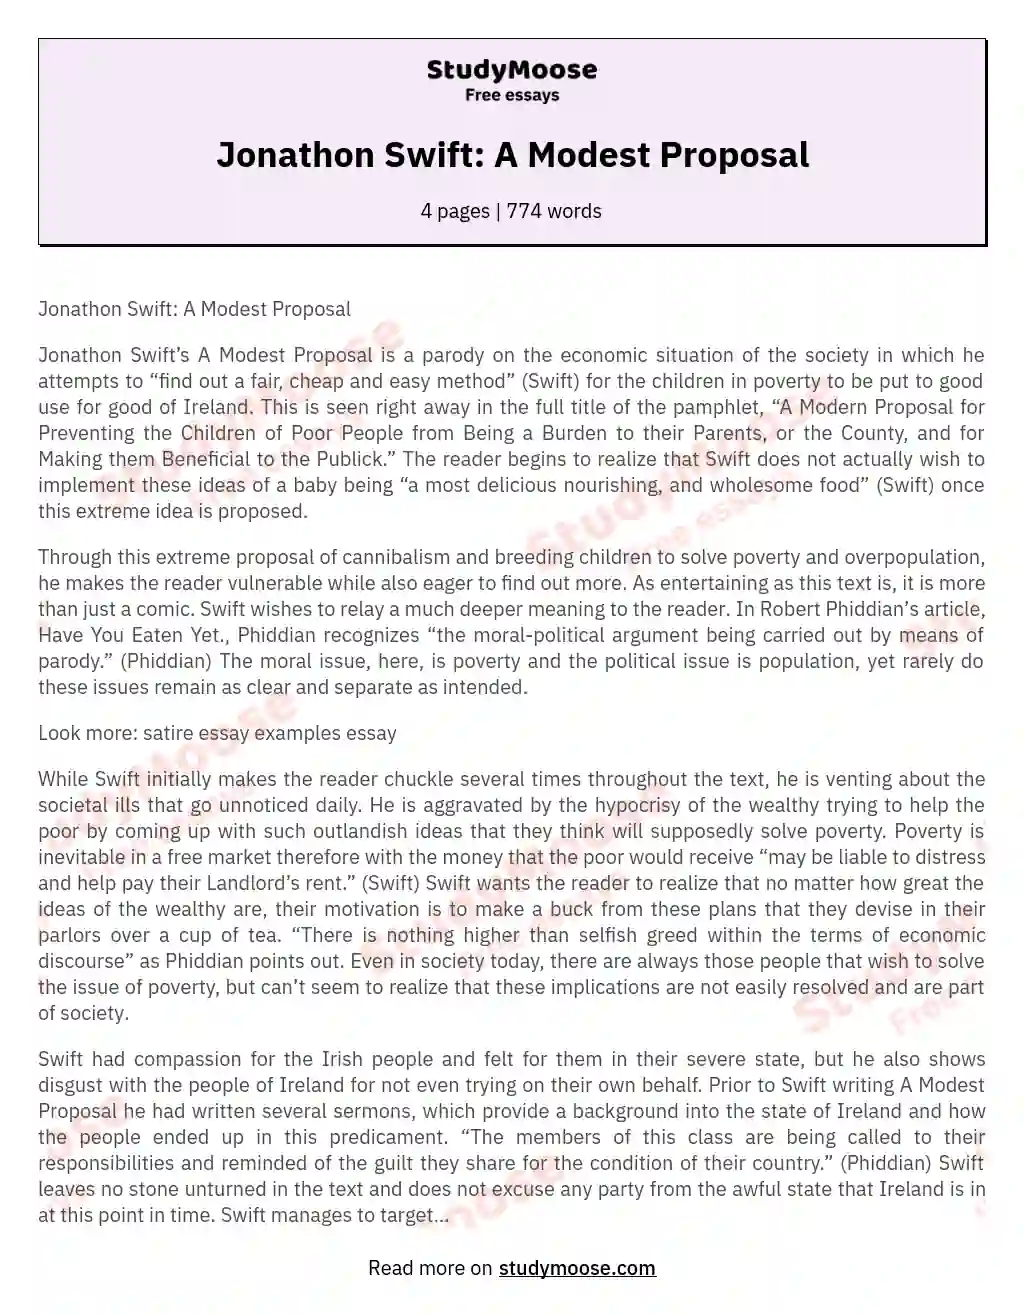 Jonathon Swift: A Modest Proposal essay